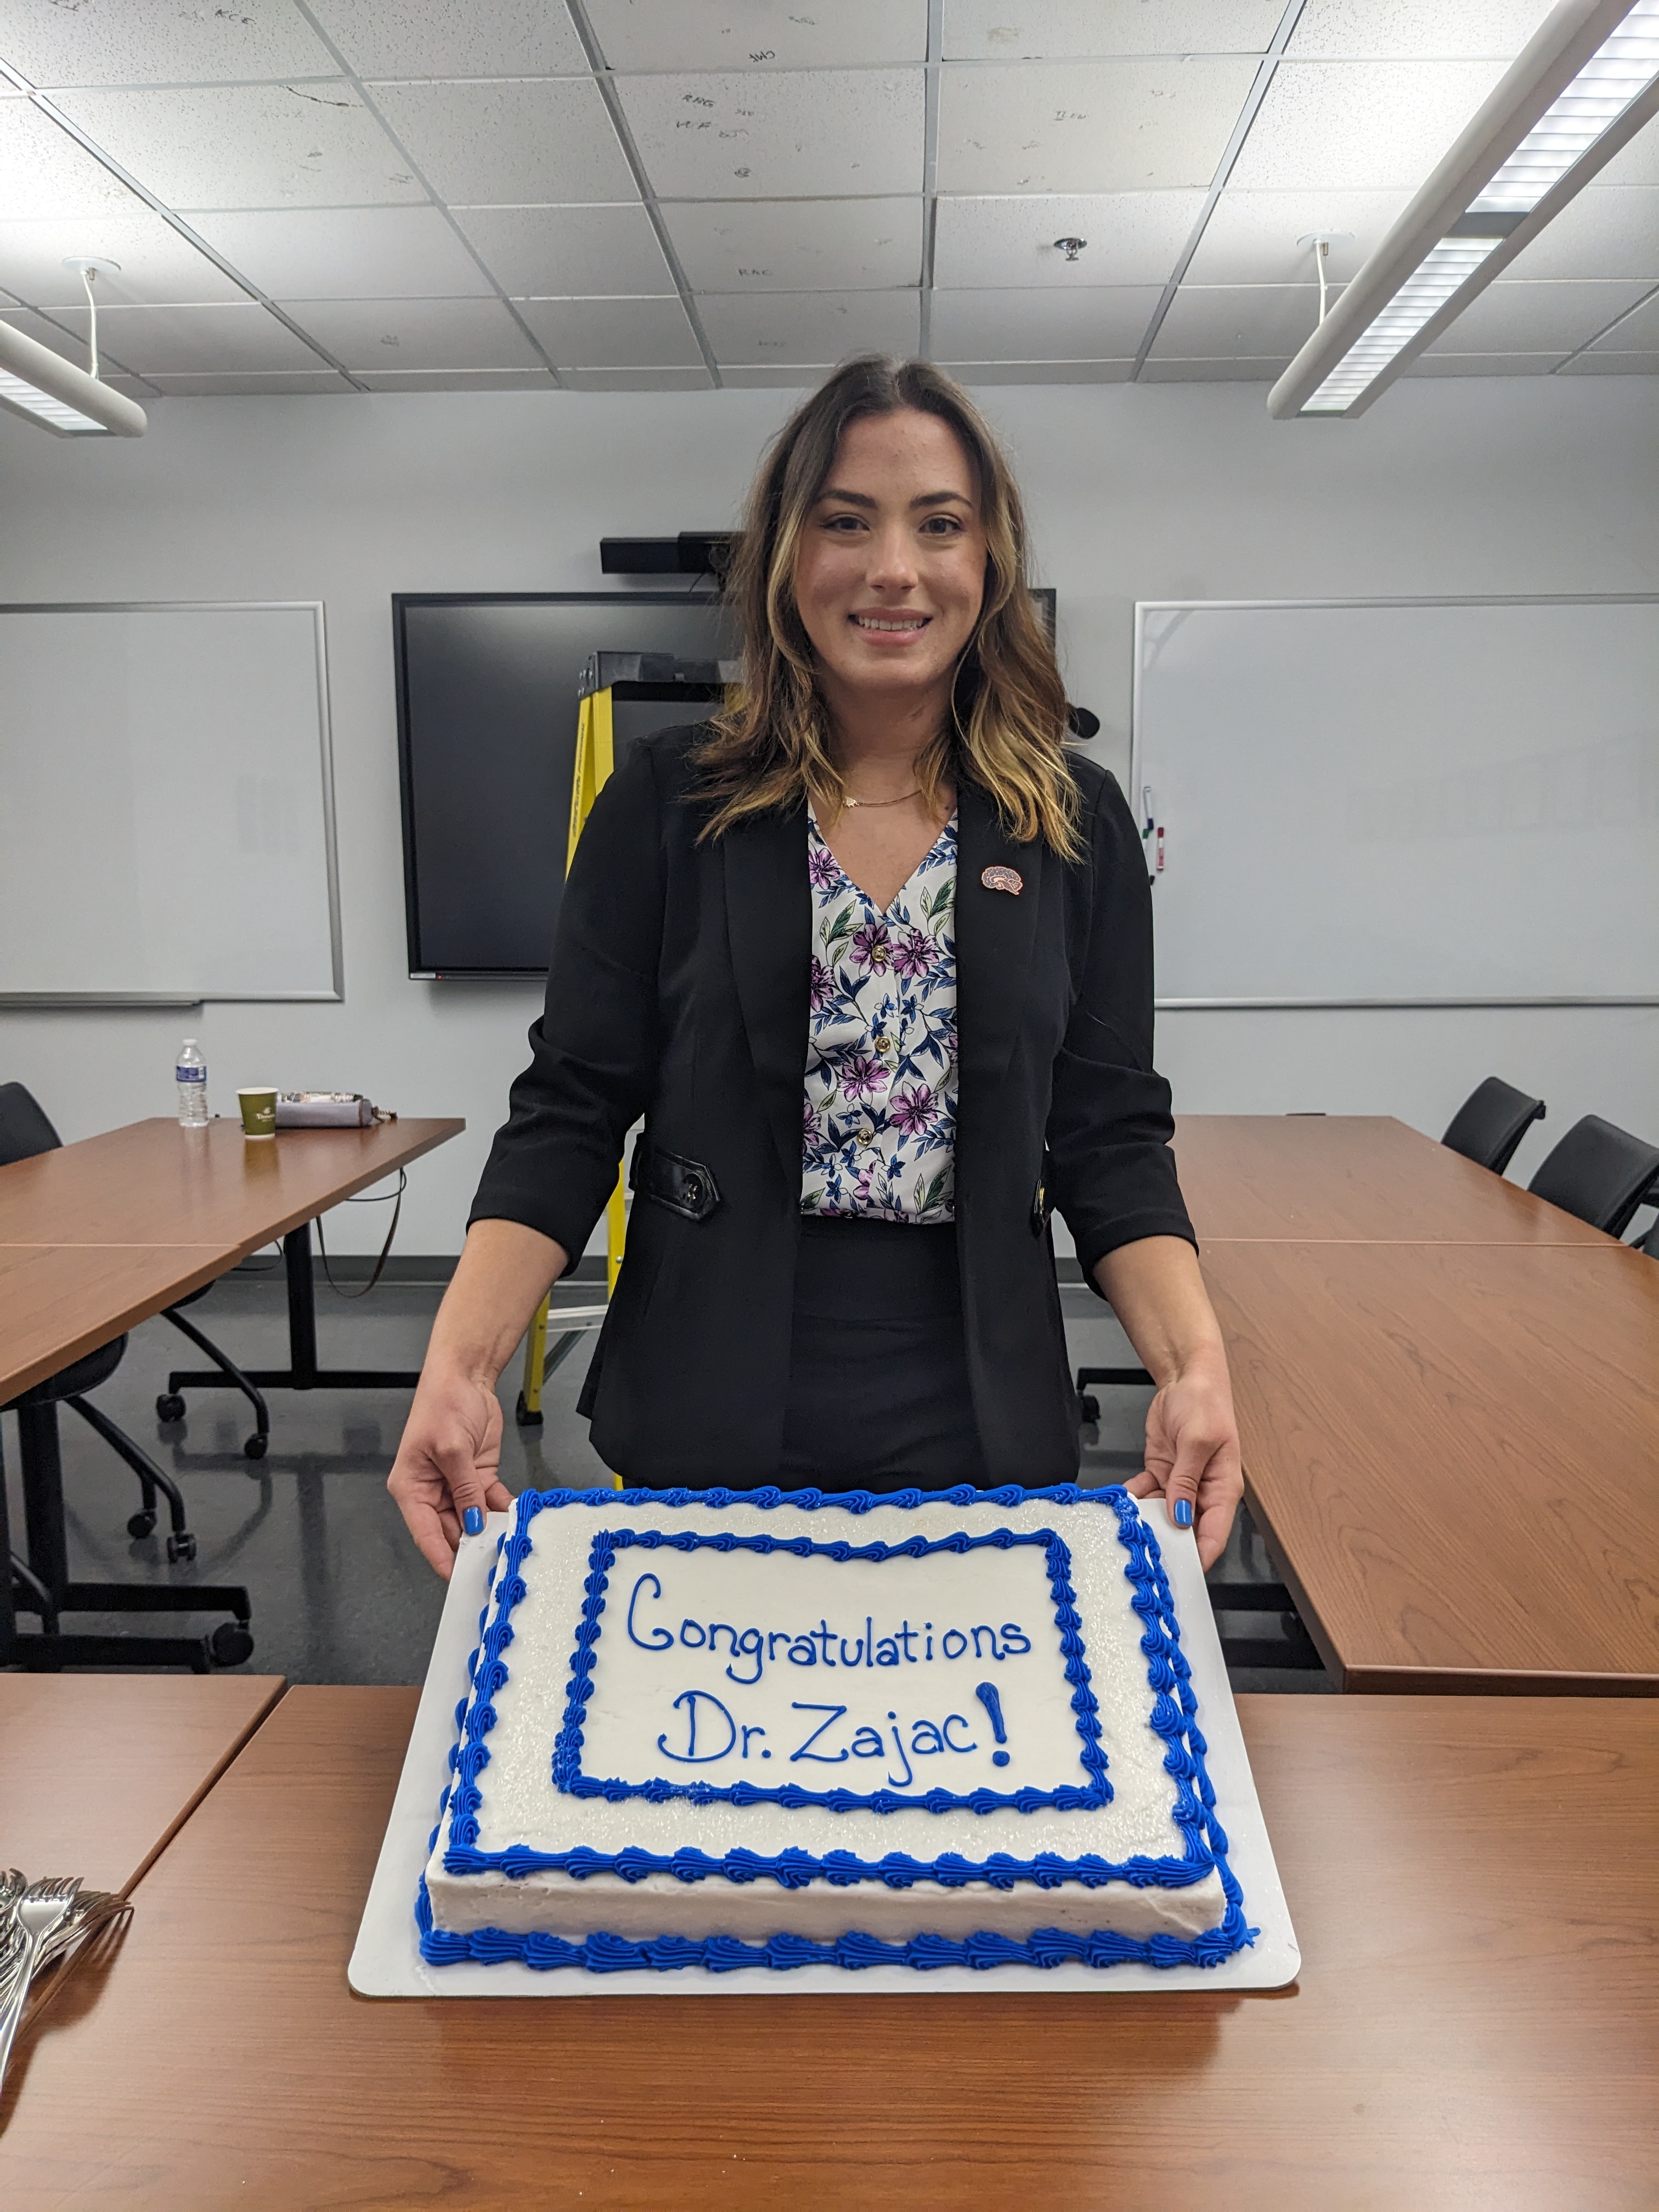 Diana Zajac holding a cake that says "Congratulations Dr Zajac!"